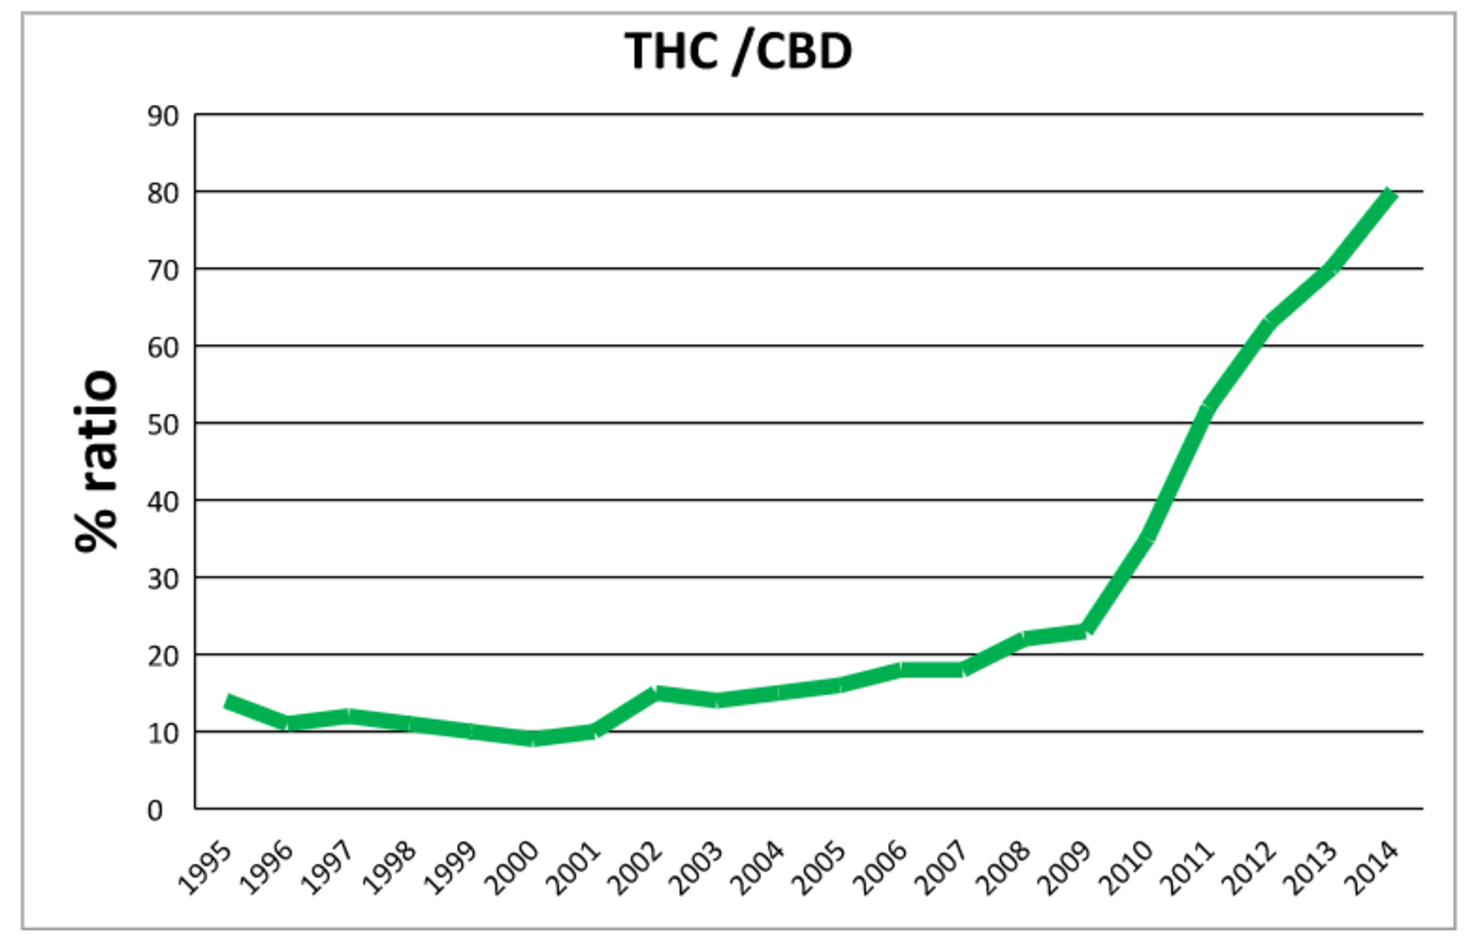 CBD / THC ratio over time. ElSohly et al 2016